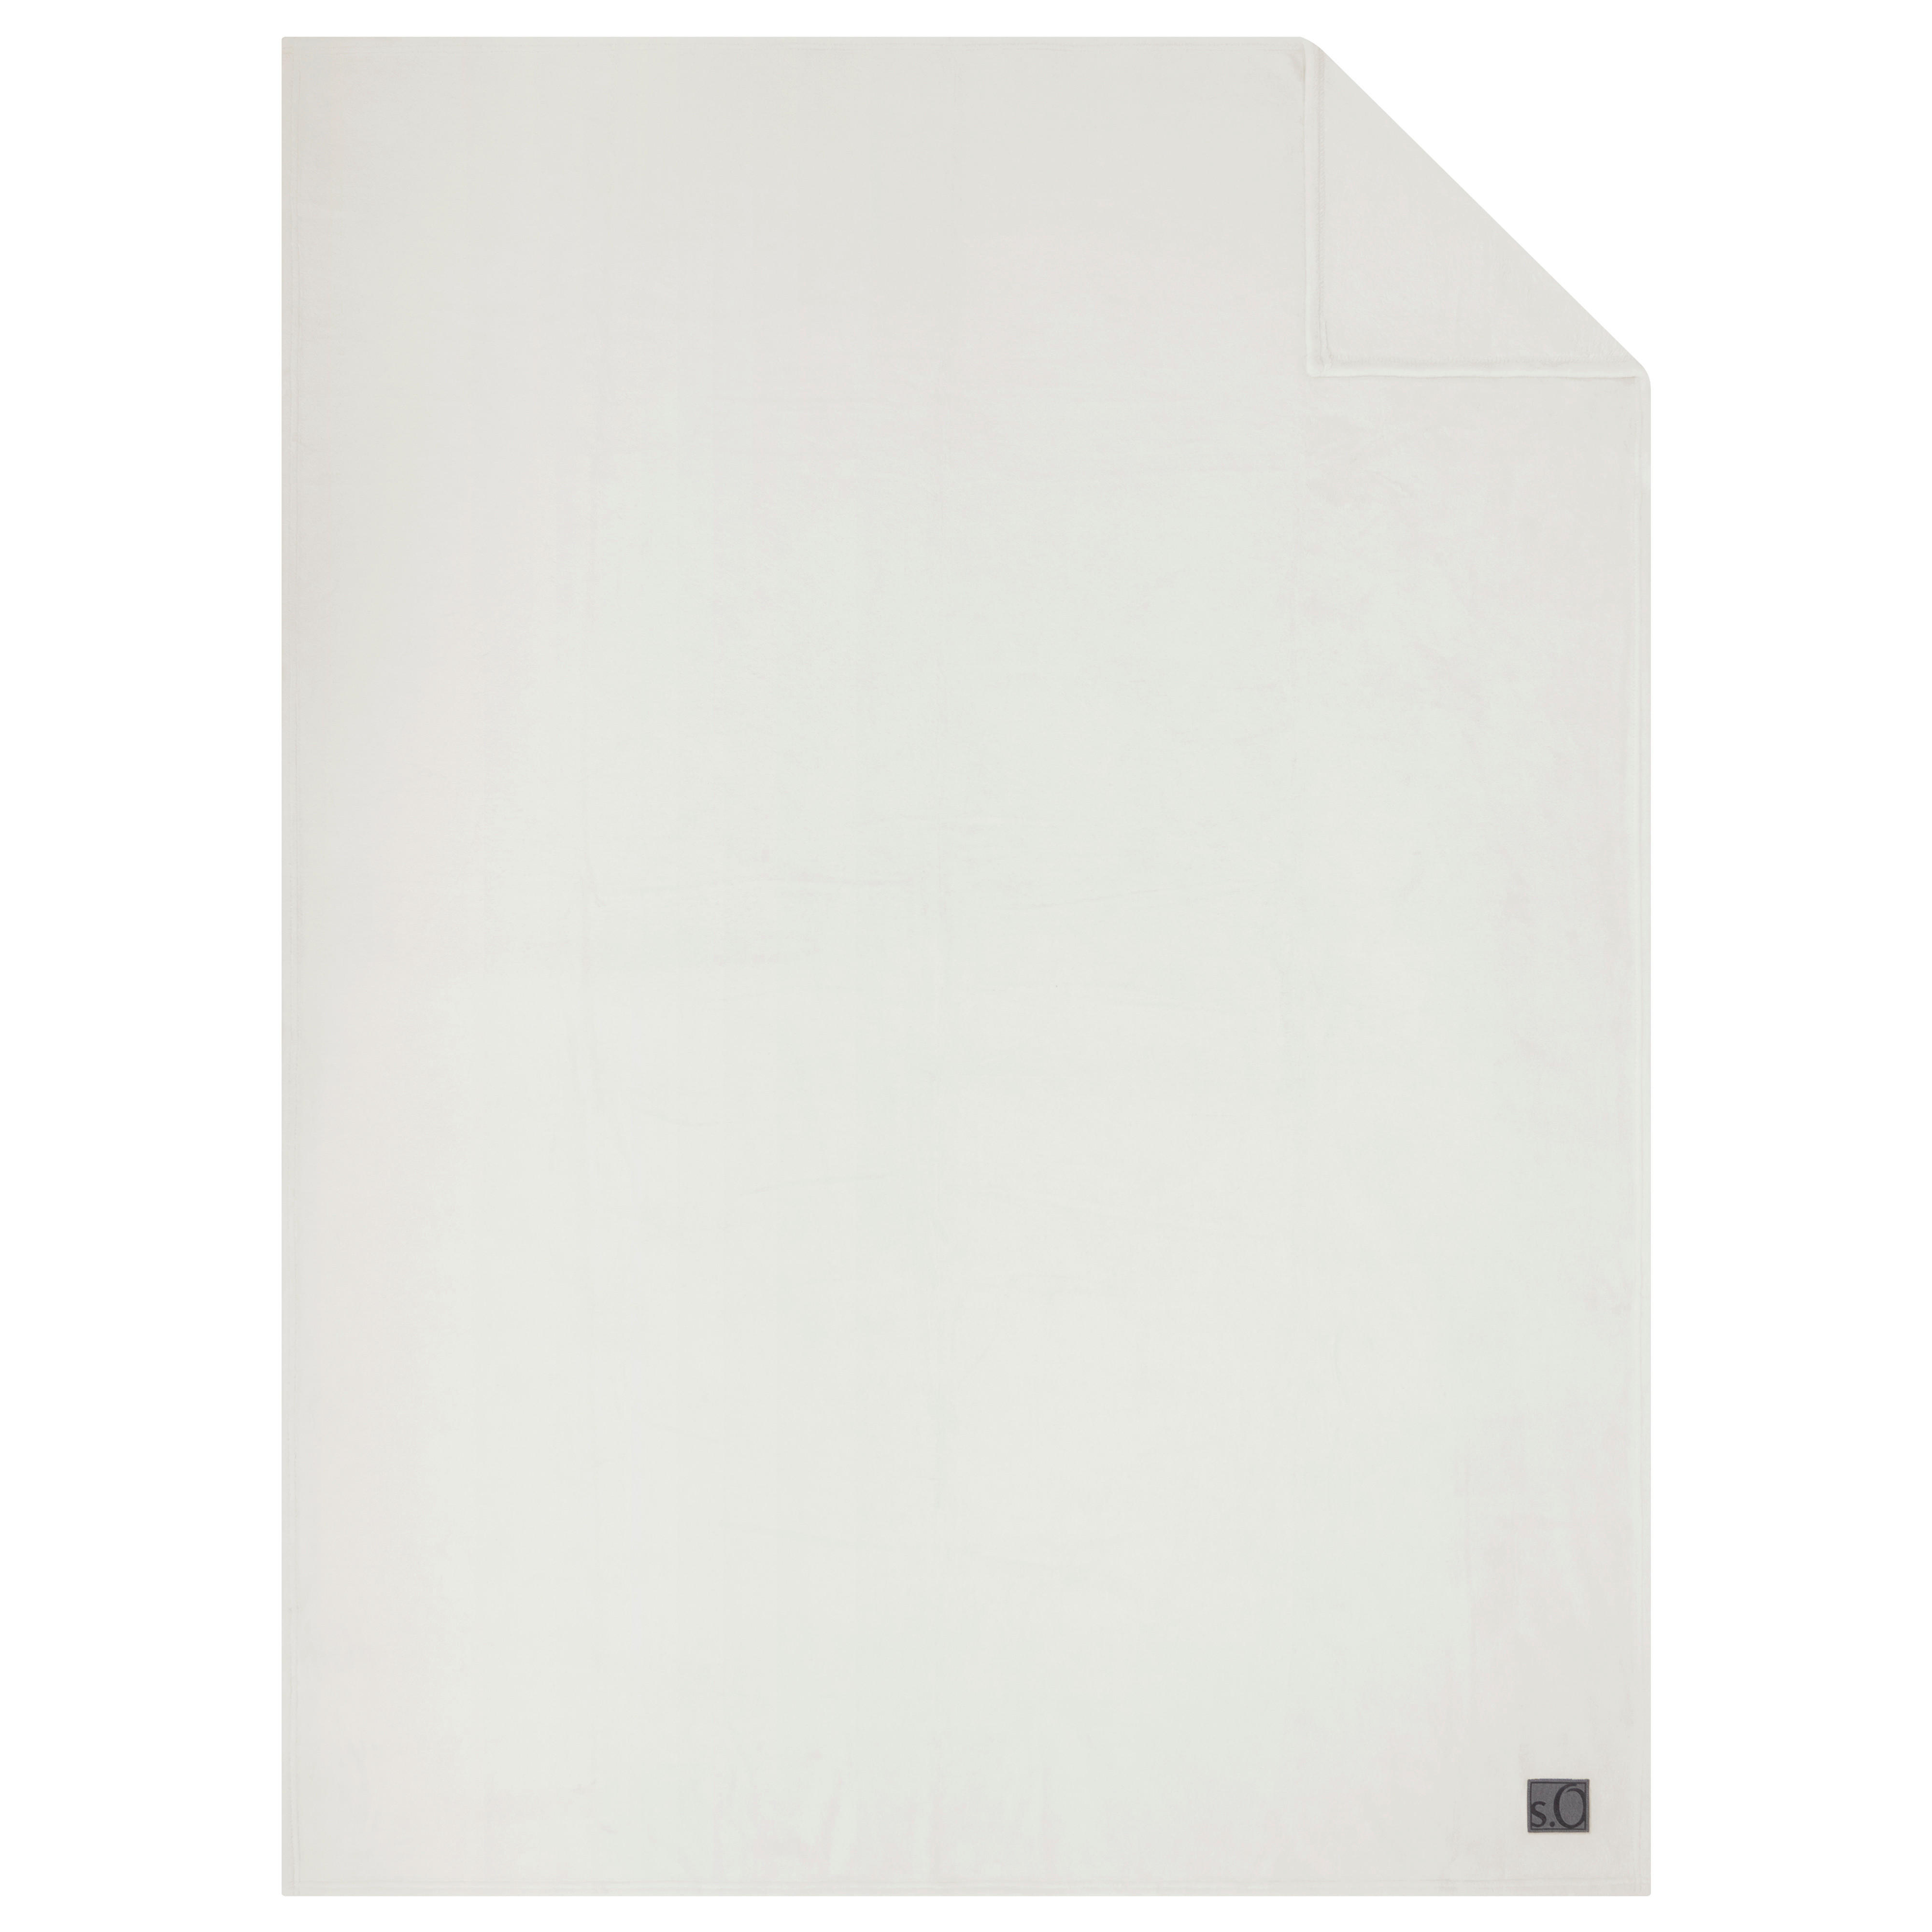 WOHNDECKE 220/240 cm  - Weiß, Basics, Textil (220/240cm) - S. Oliver